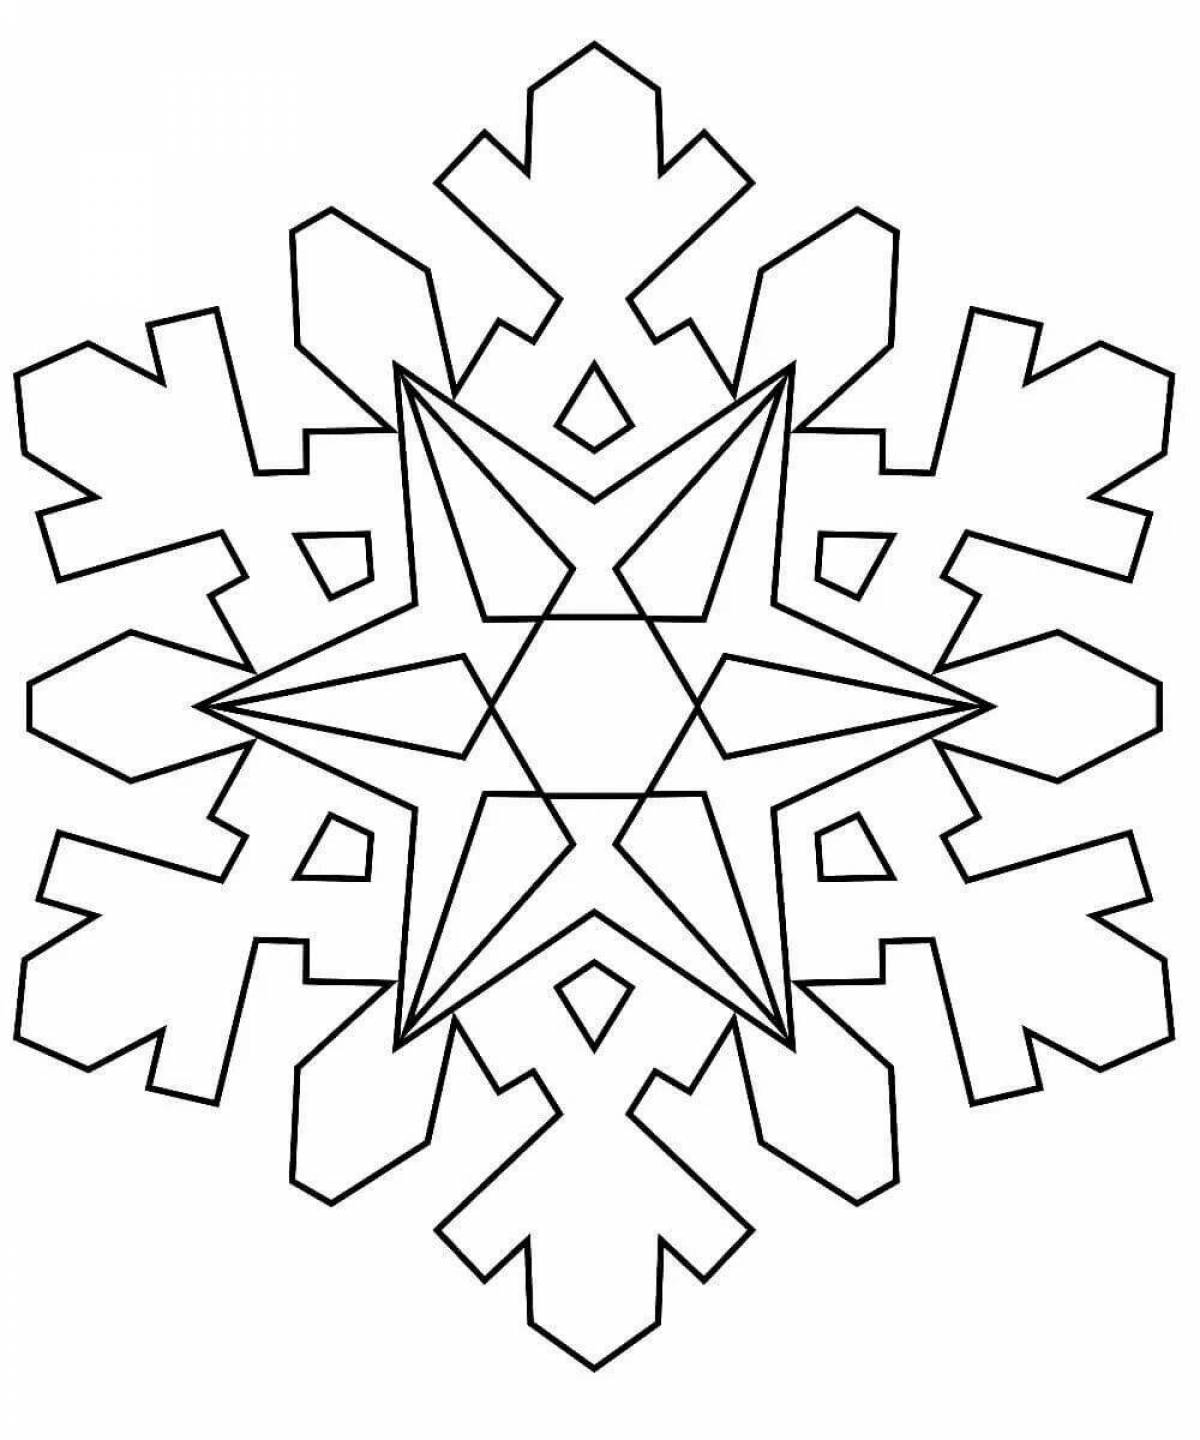 Fascinating Christmas snowflake coloring book